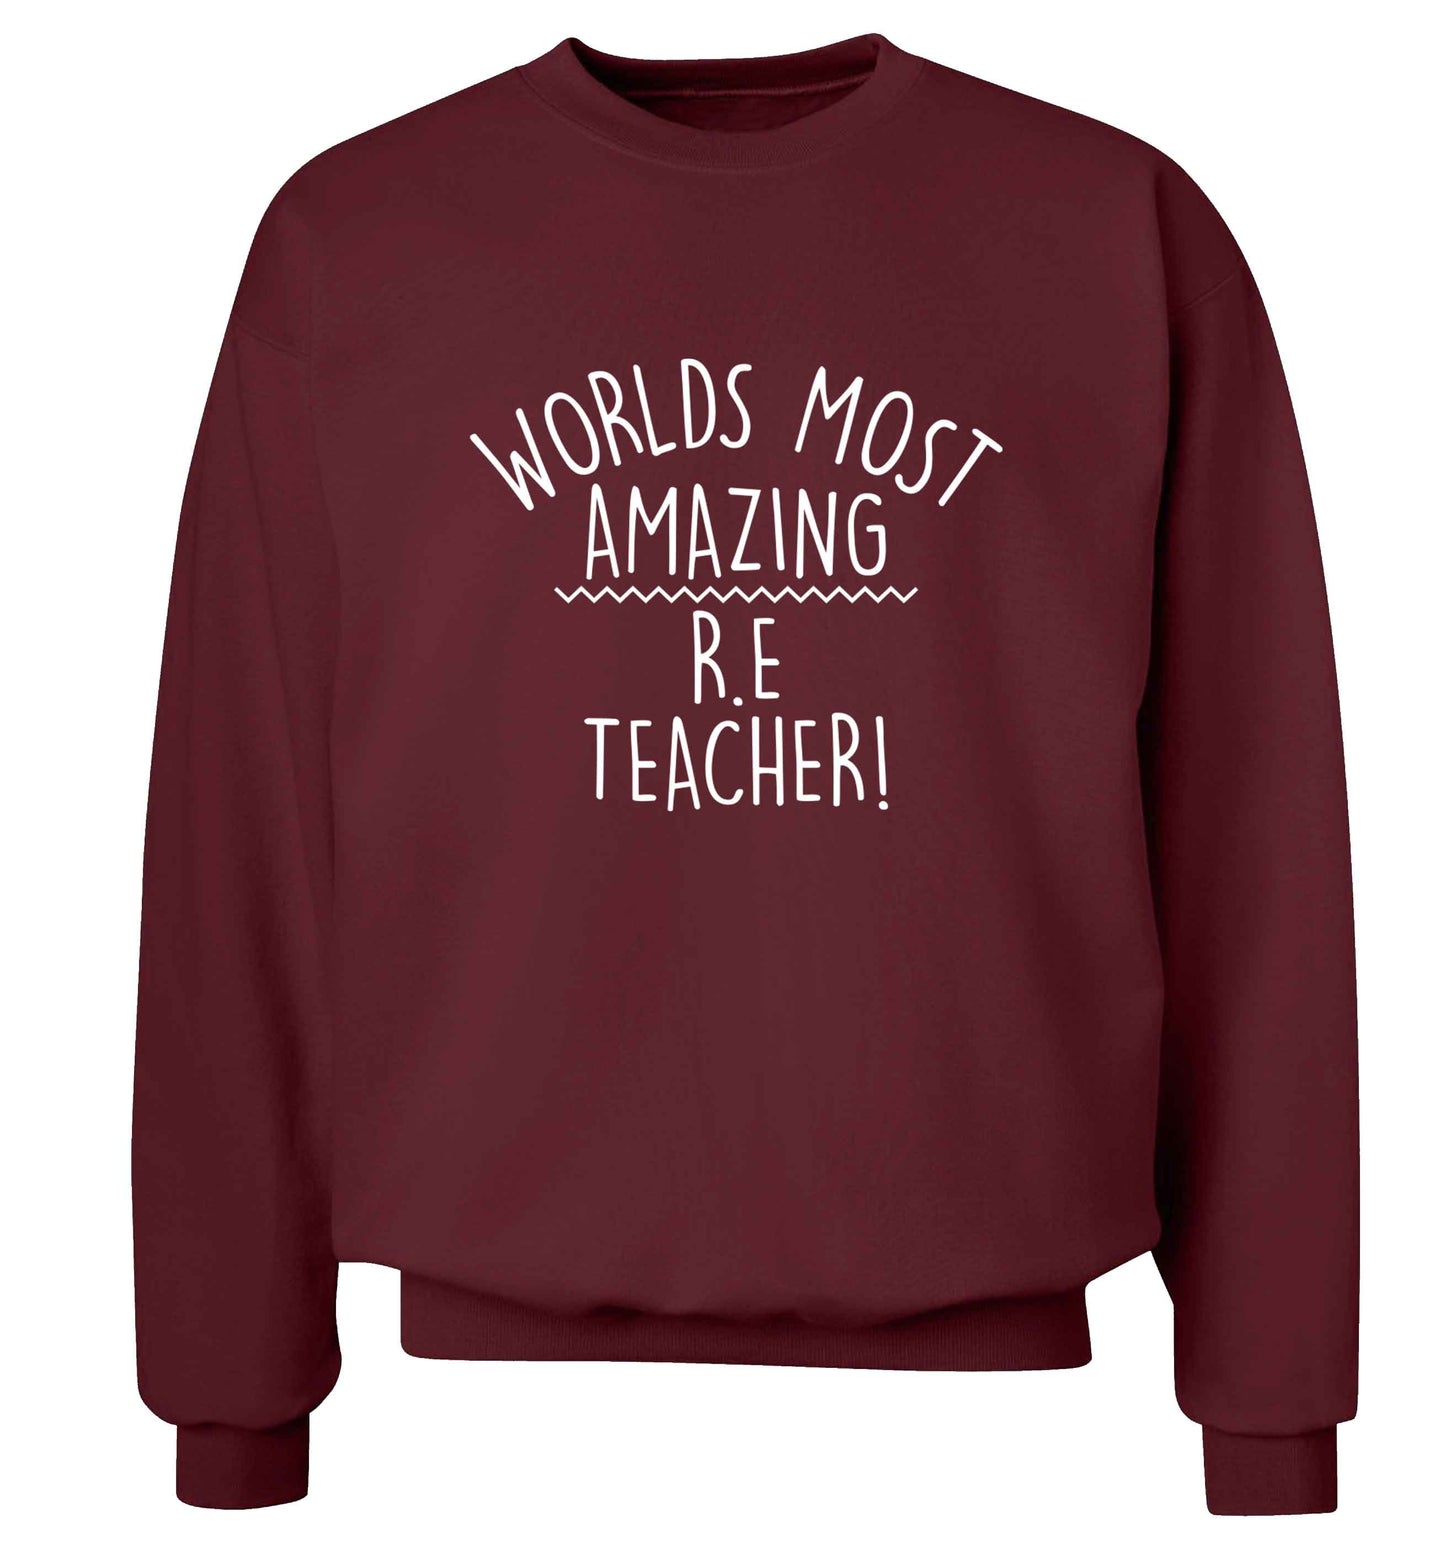 Worlds most amazing R.E teacher adult's unisex maroon sweater 2XL